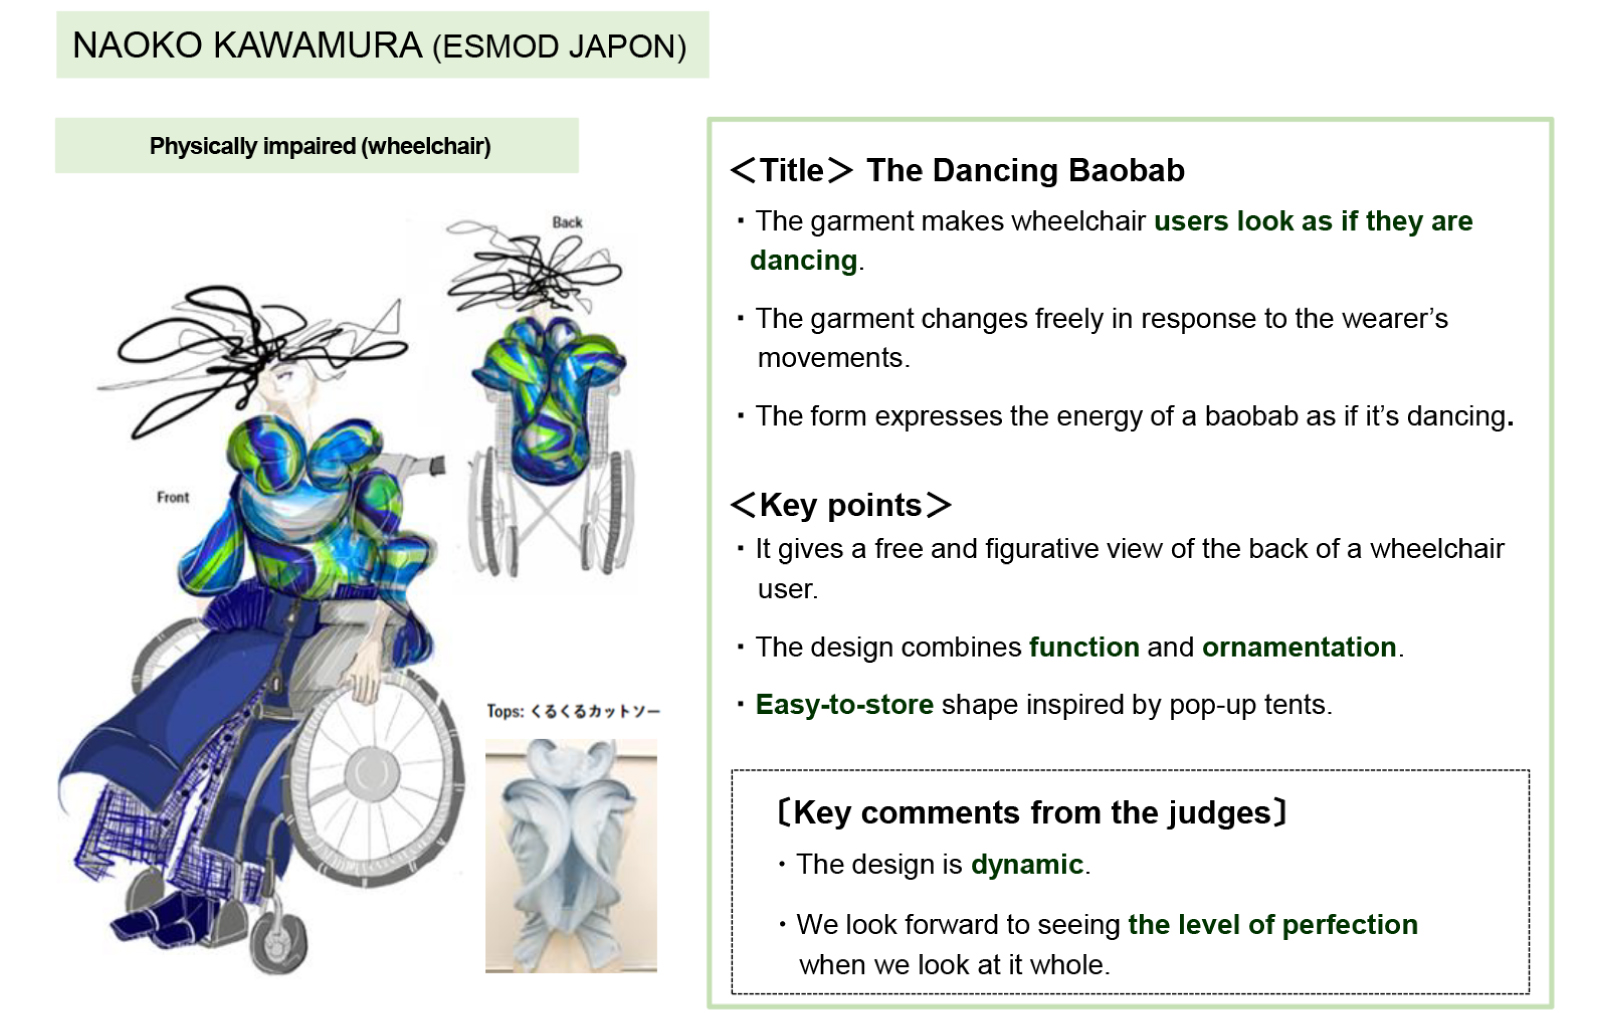 The Dancing Baobab